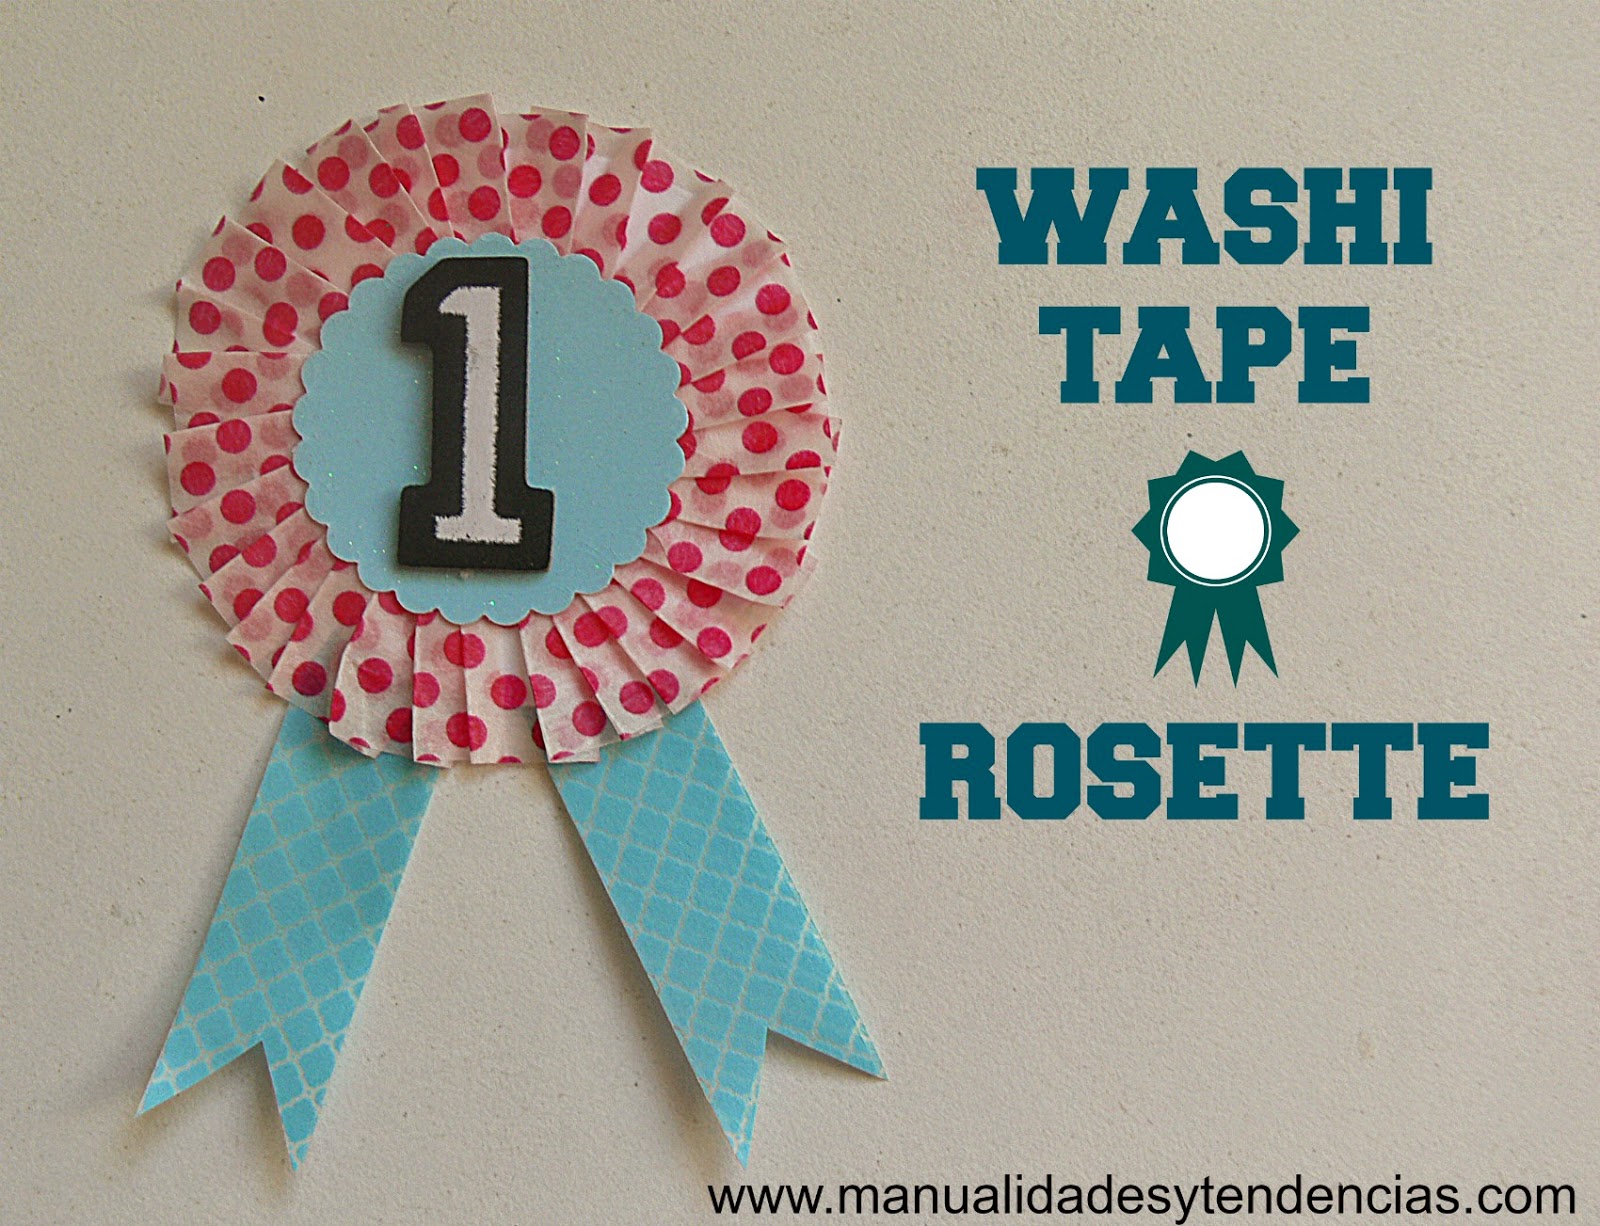 Washi tape rosette tutorial